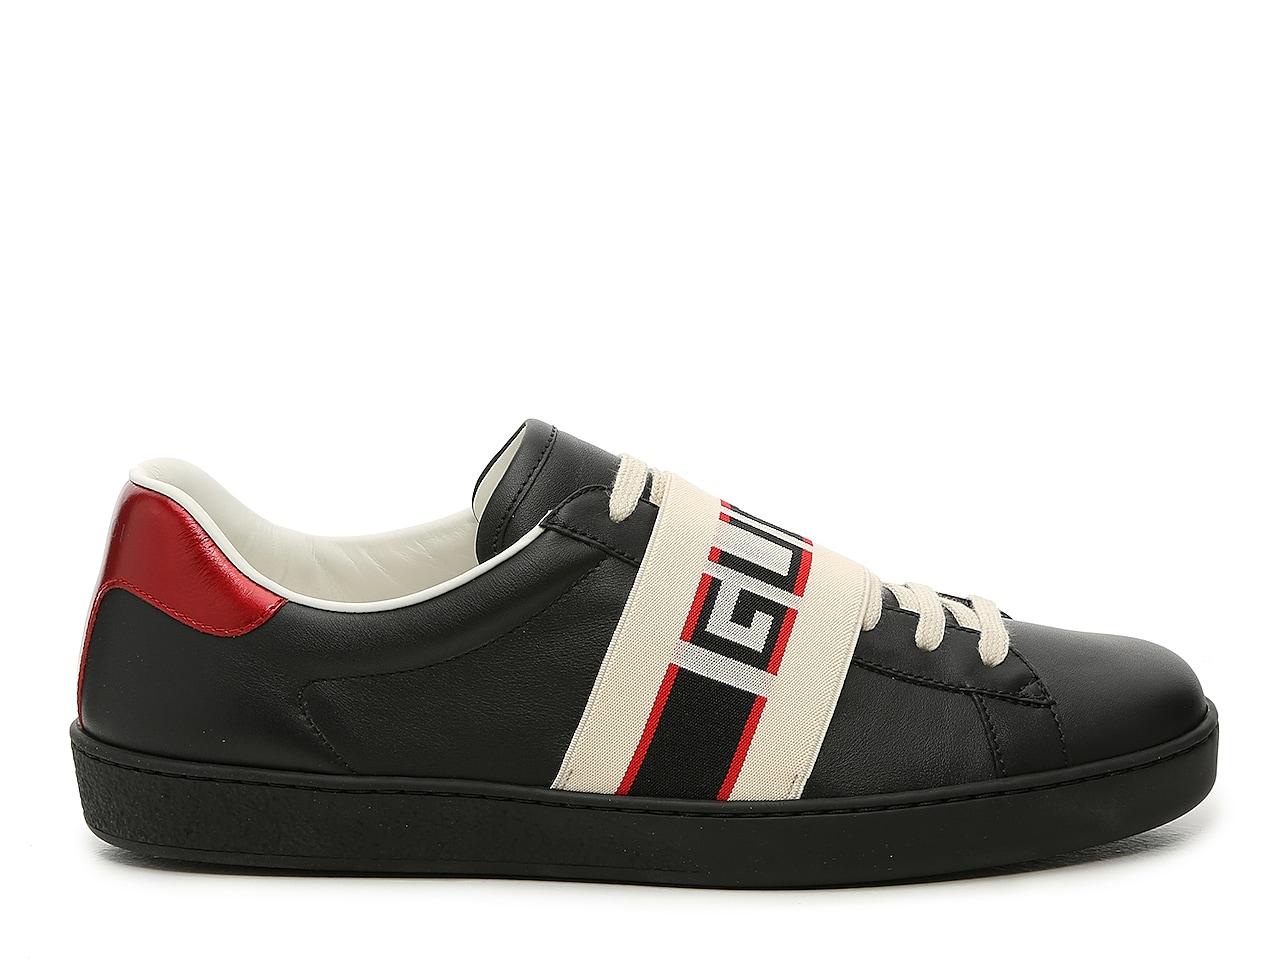 Gucci Rubber New Ace Sneaker in Nero (Black) for Men - Lyst